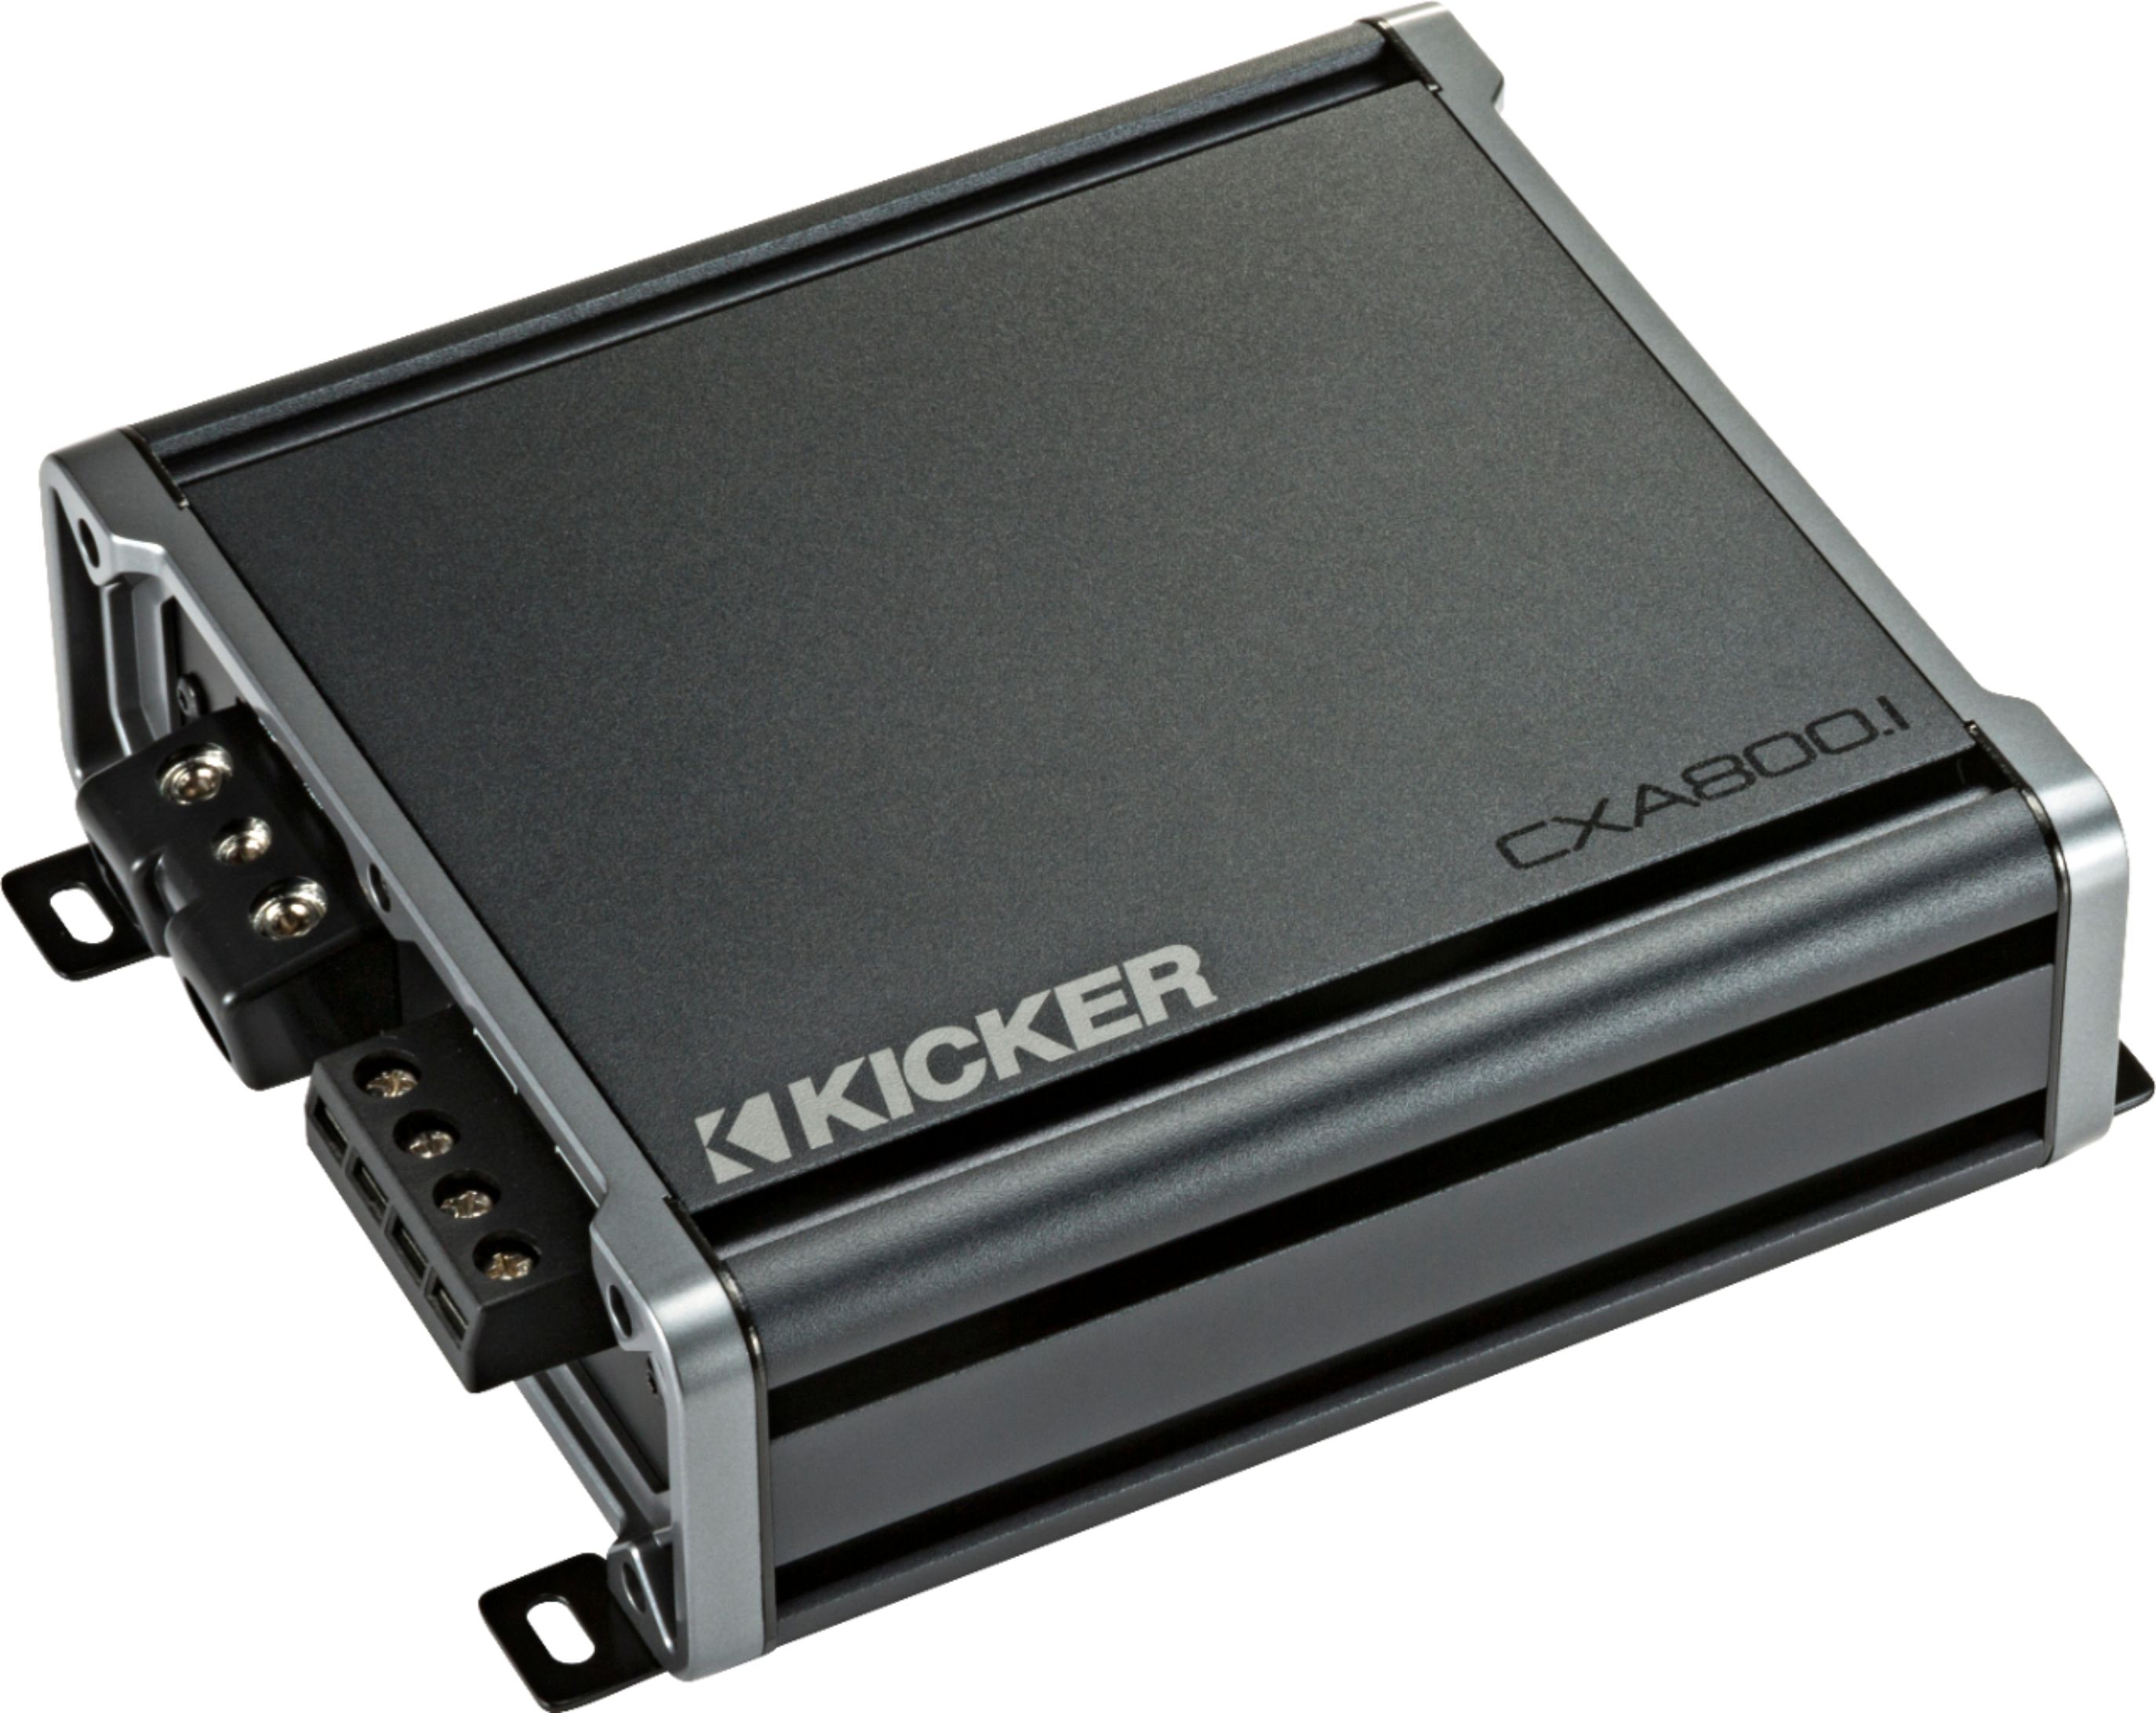 KICKER CX 800W Class D Digital Mono Amplifier with Variable Low 